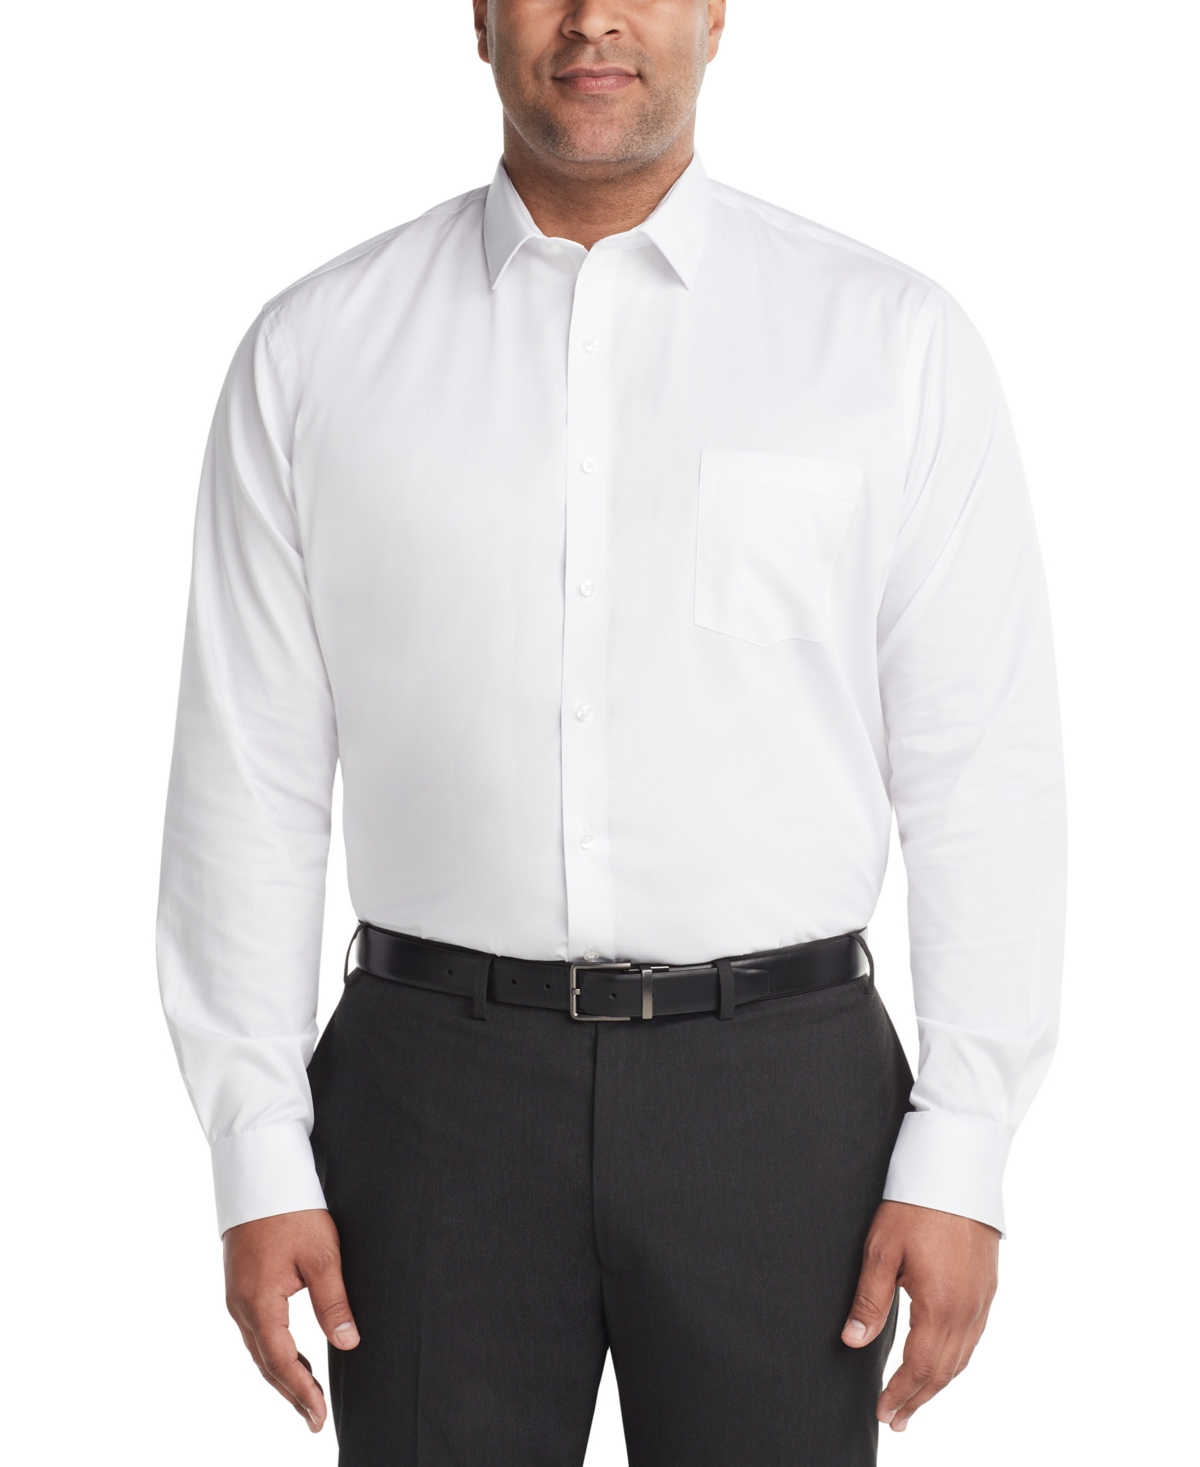 Men's Big & Tall Solid Dress Shirt - White